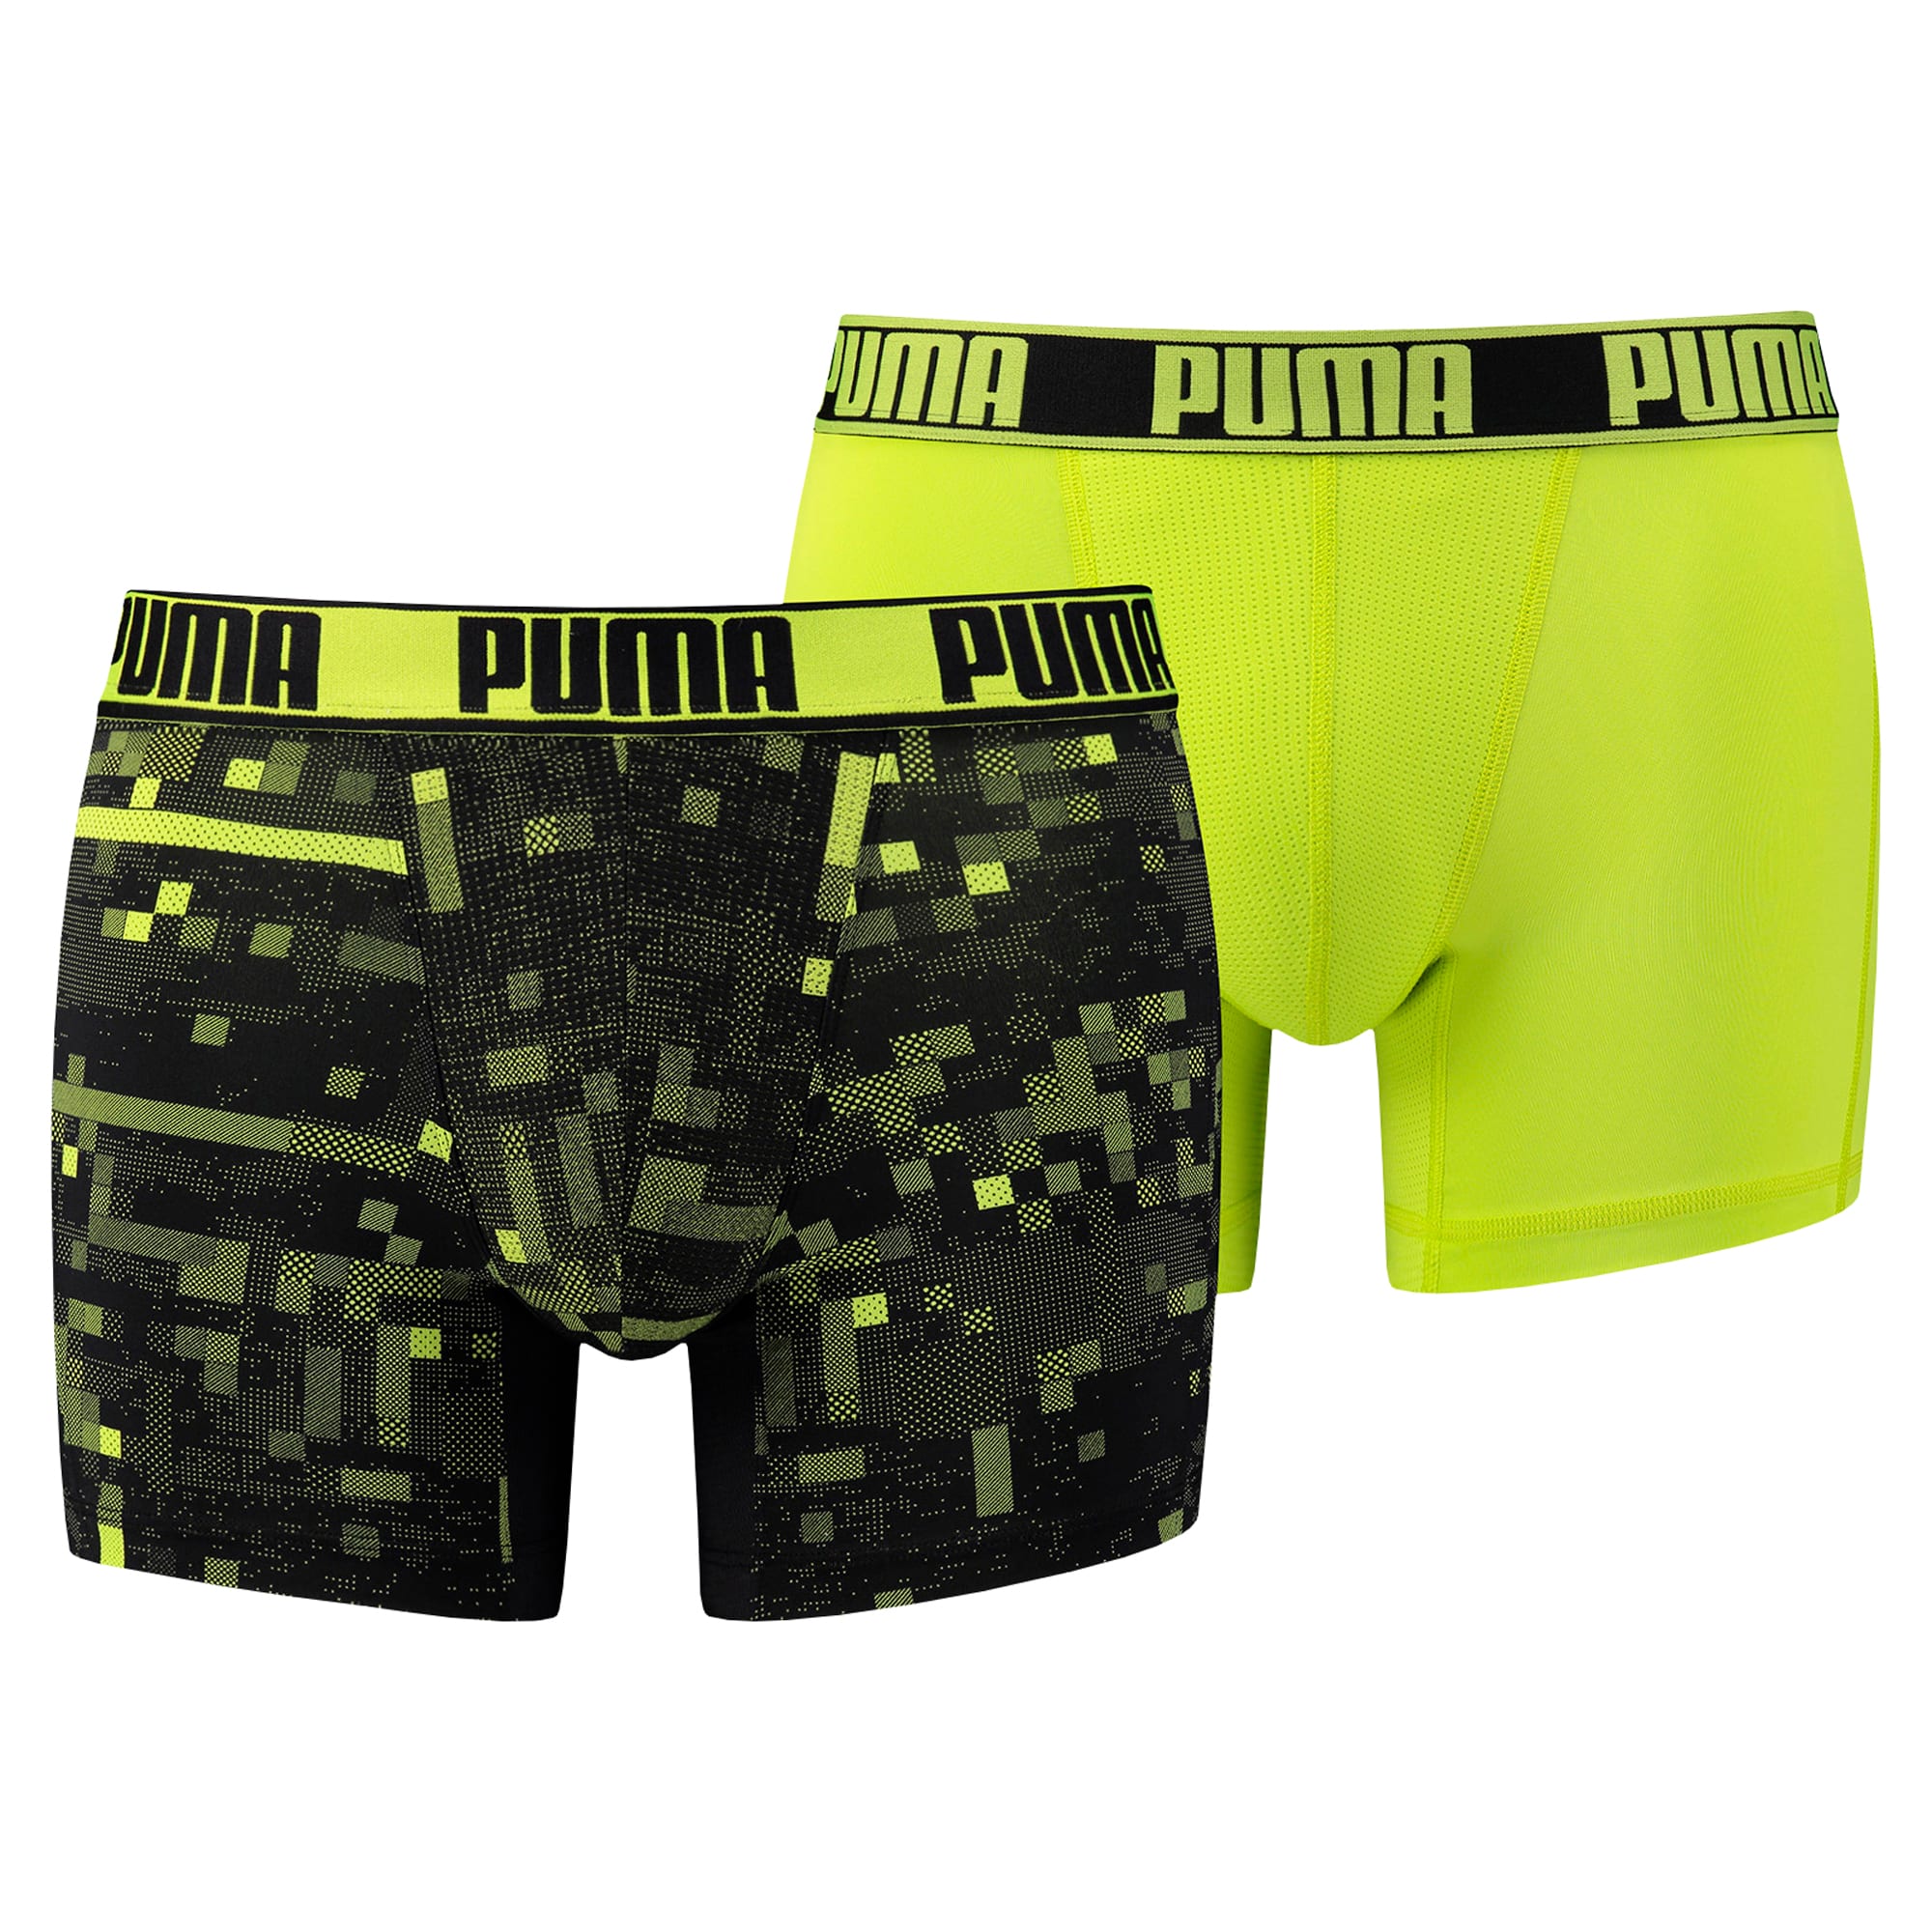 Digital Blocking Boxer Shorts 2 Pack 